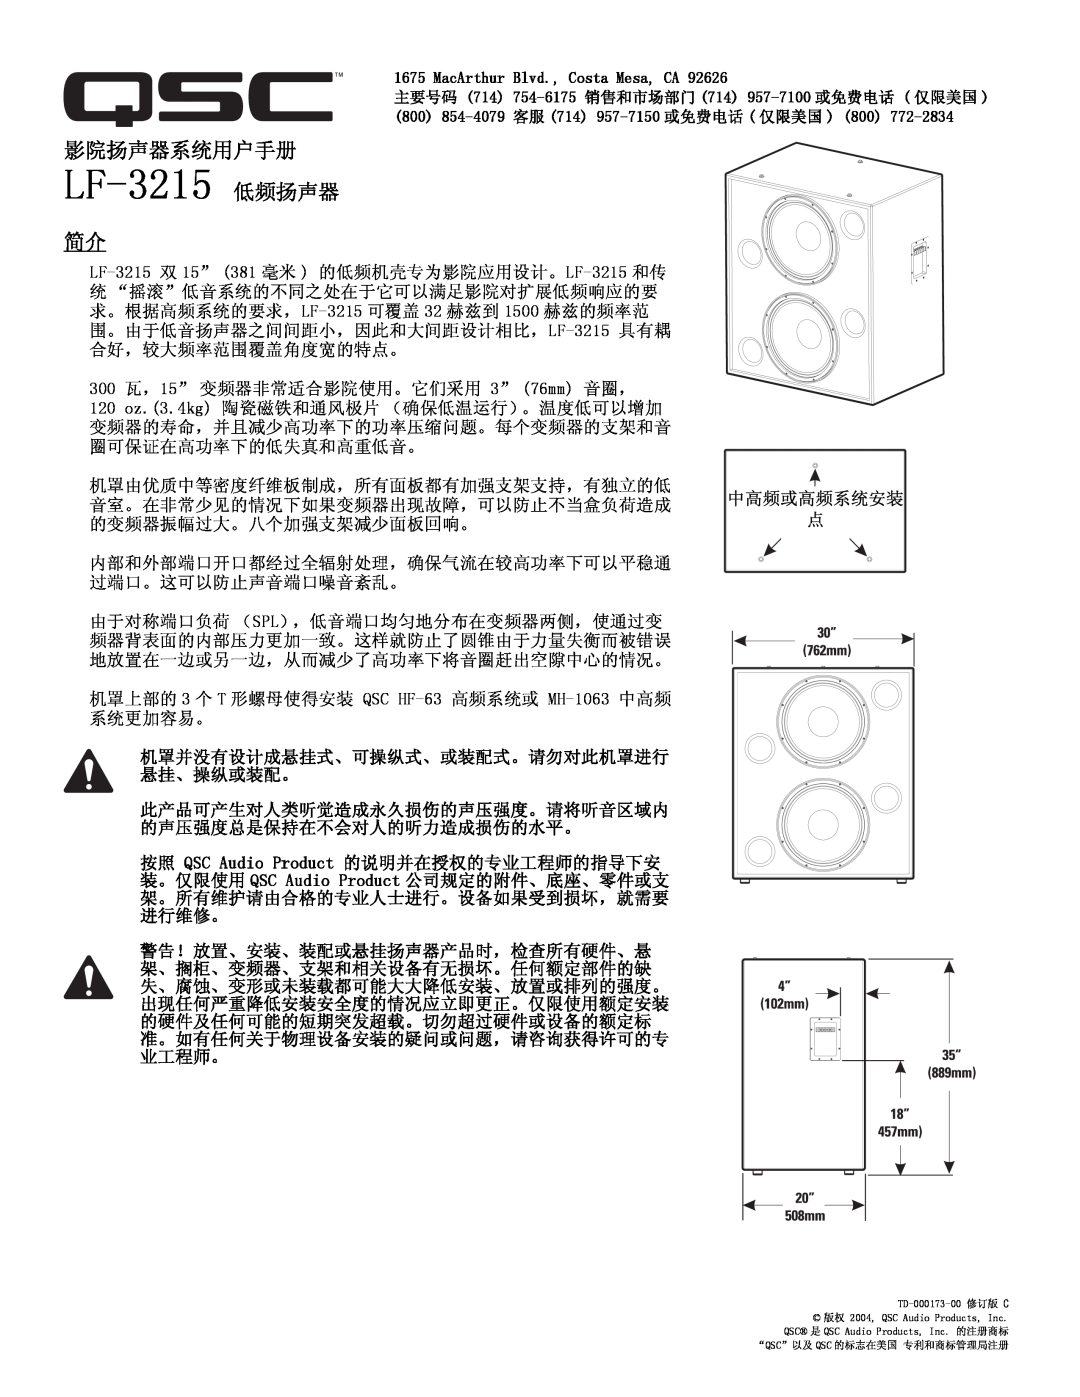 QSC Audio SC-322 specifications LF-3215 低频扬声器, 影院扬声器系统用户手册, 中高频或高频系统安装 点 